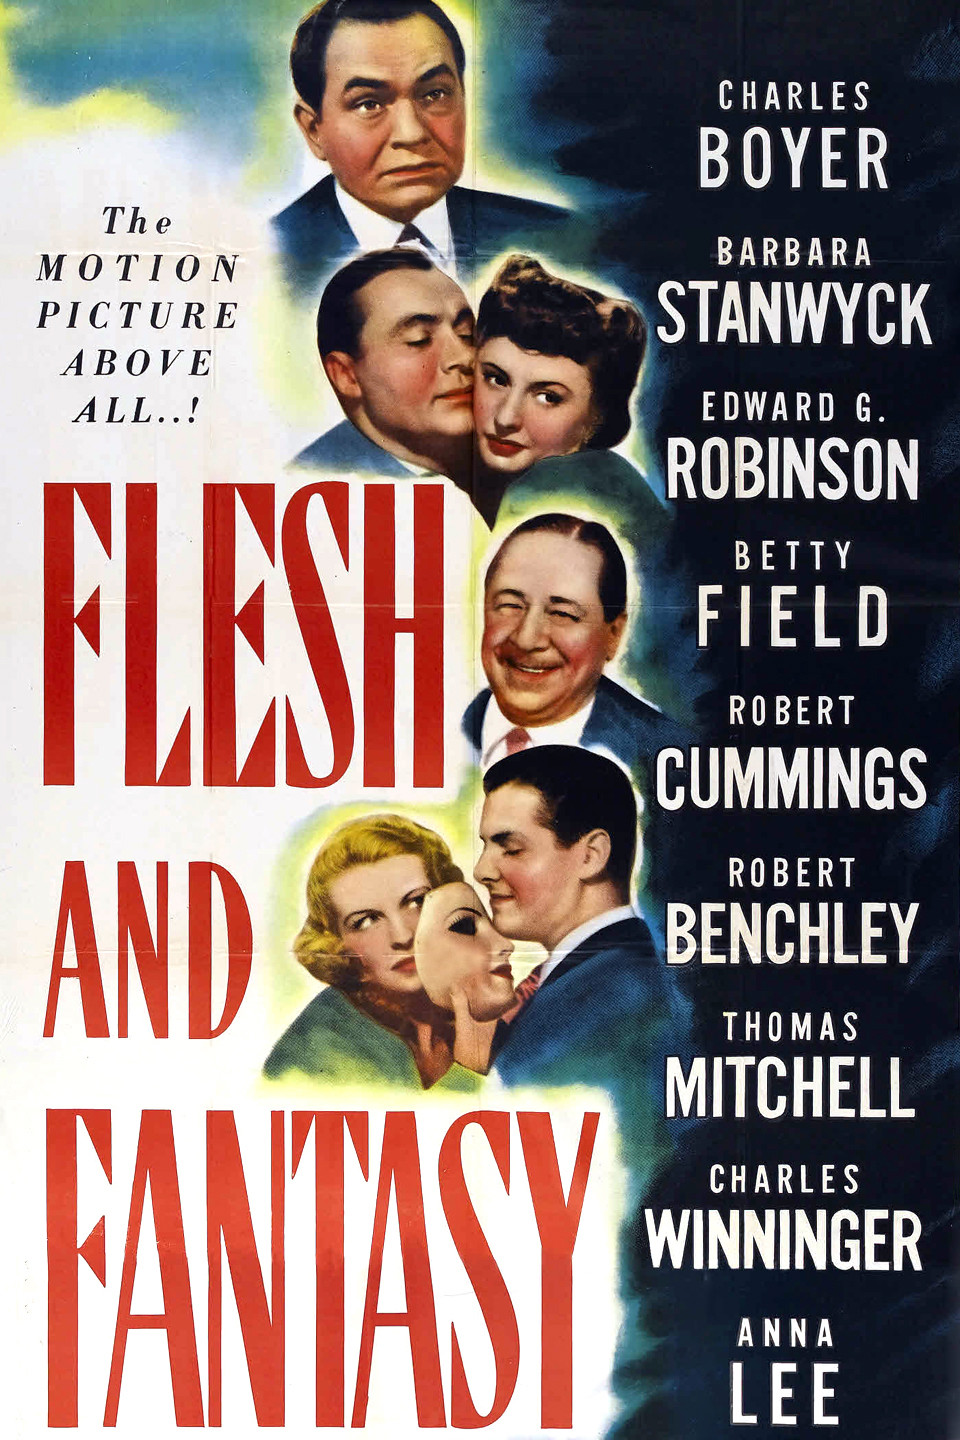 Flesh and Fantasy